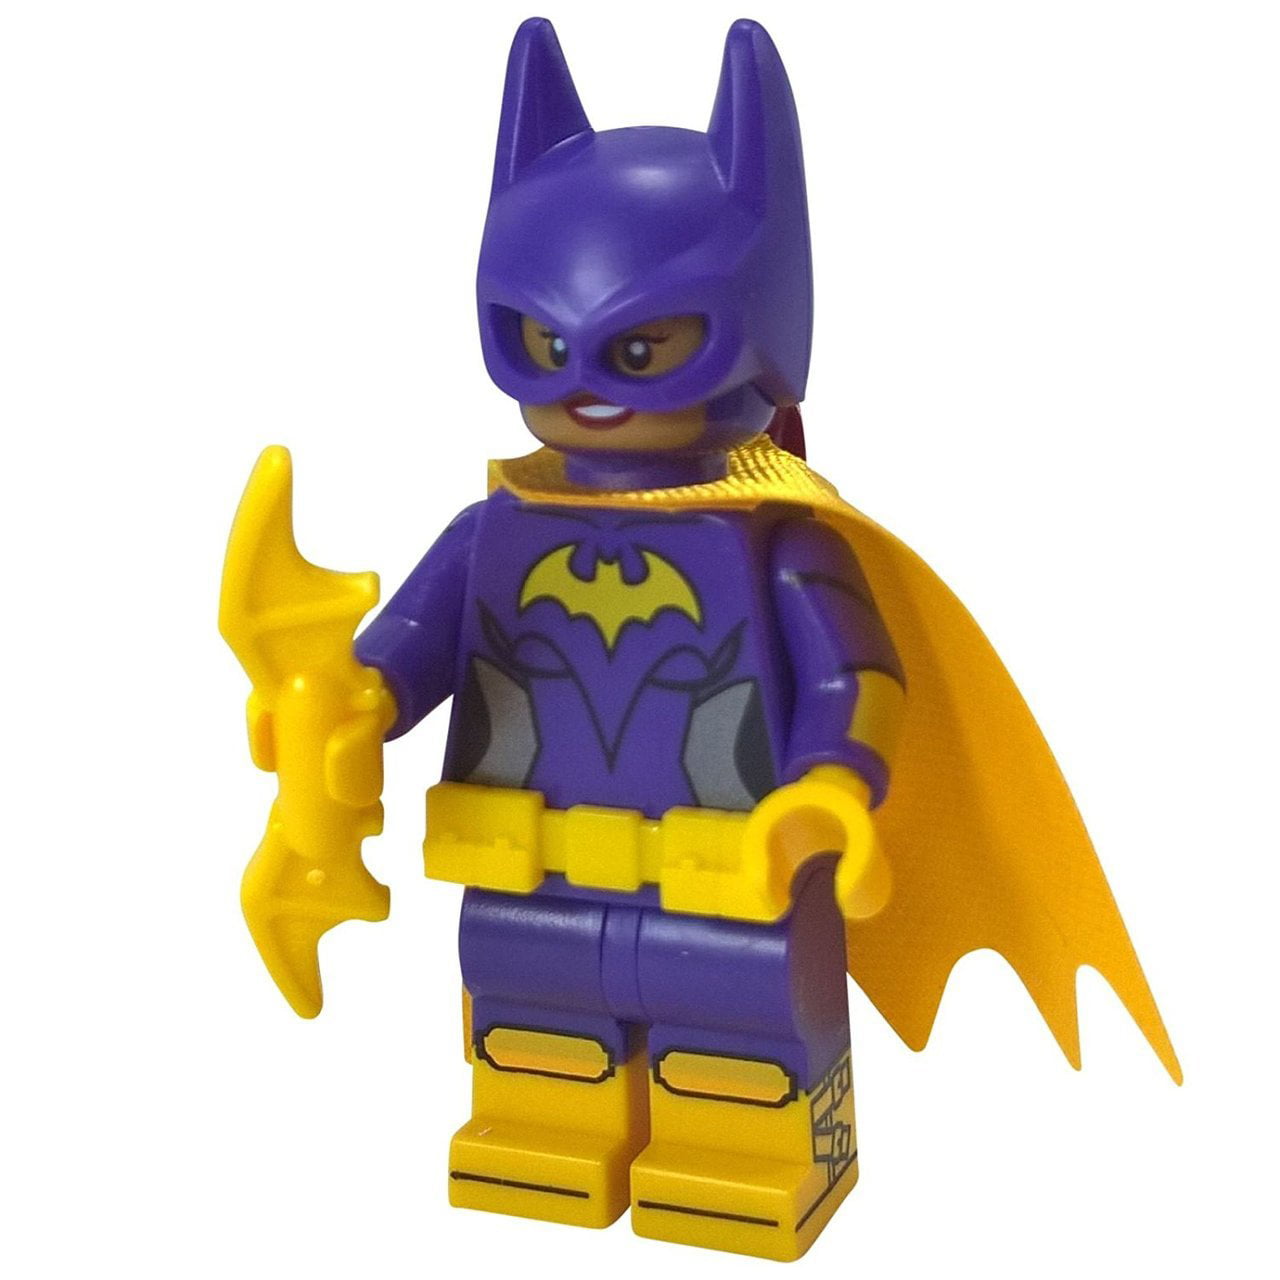 LEGO Superheroes Batgirl with batarang from the LEGO Batman Movie | Walmart  Canada